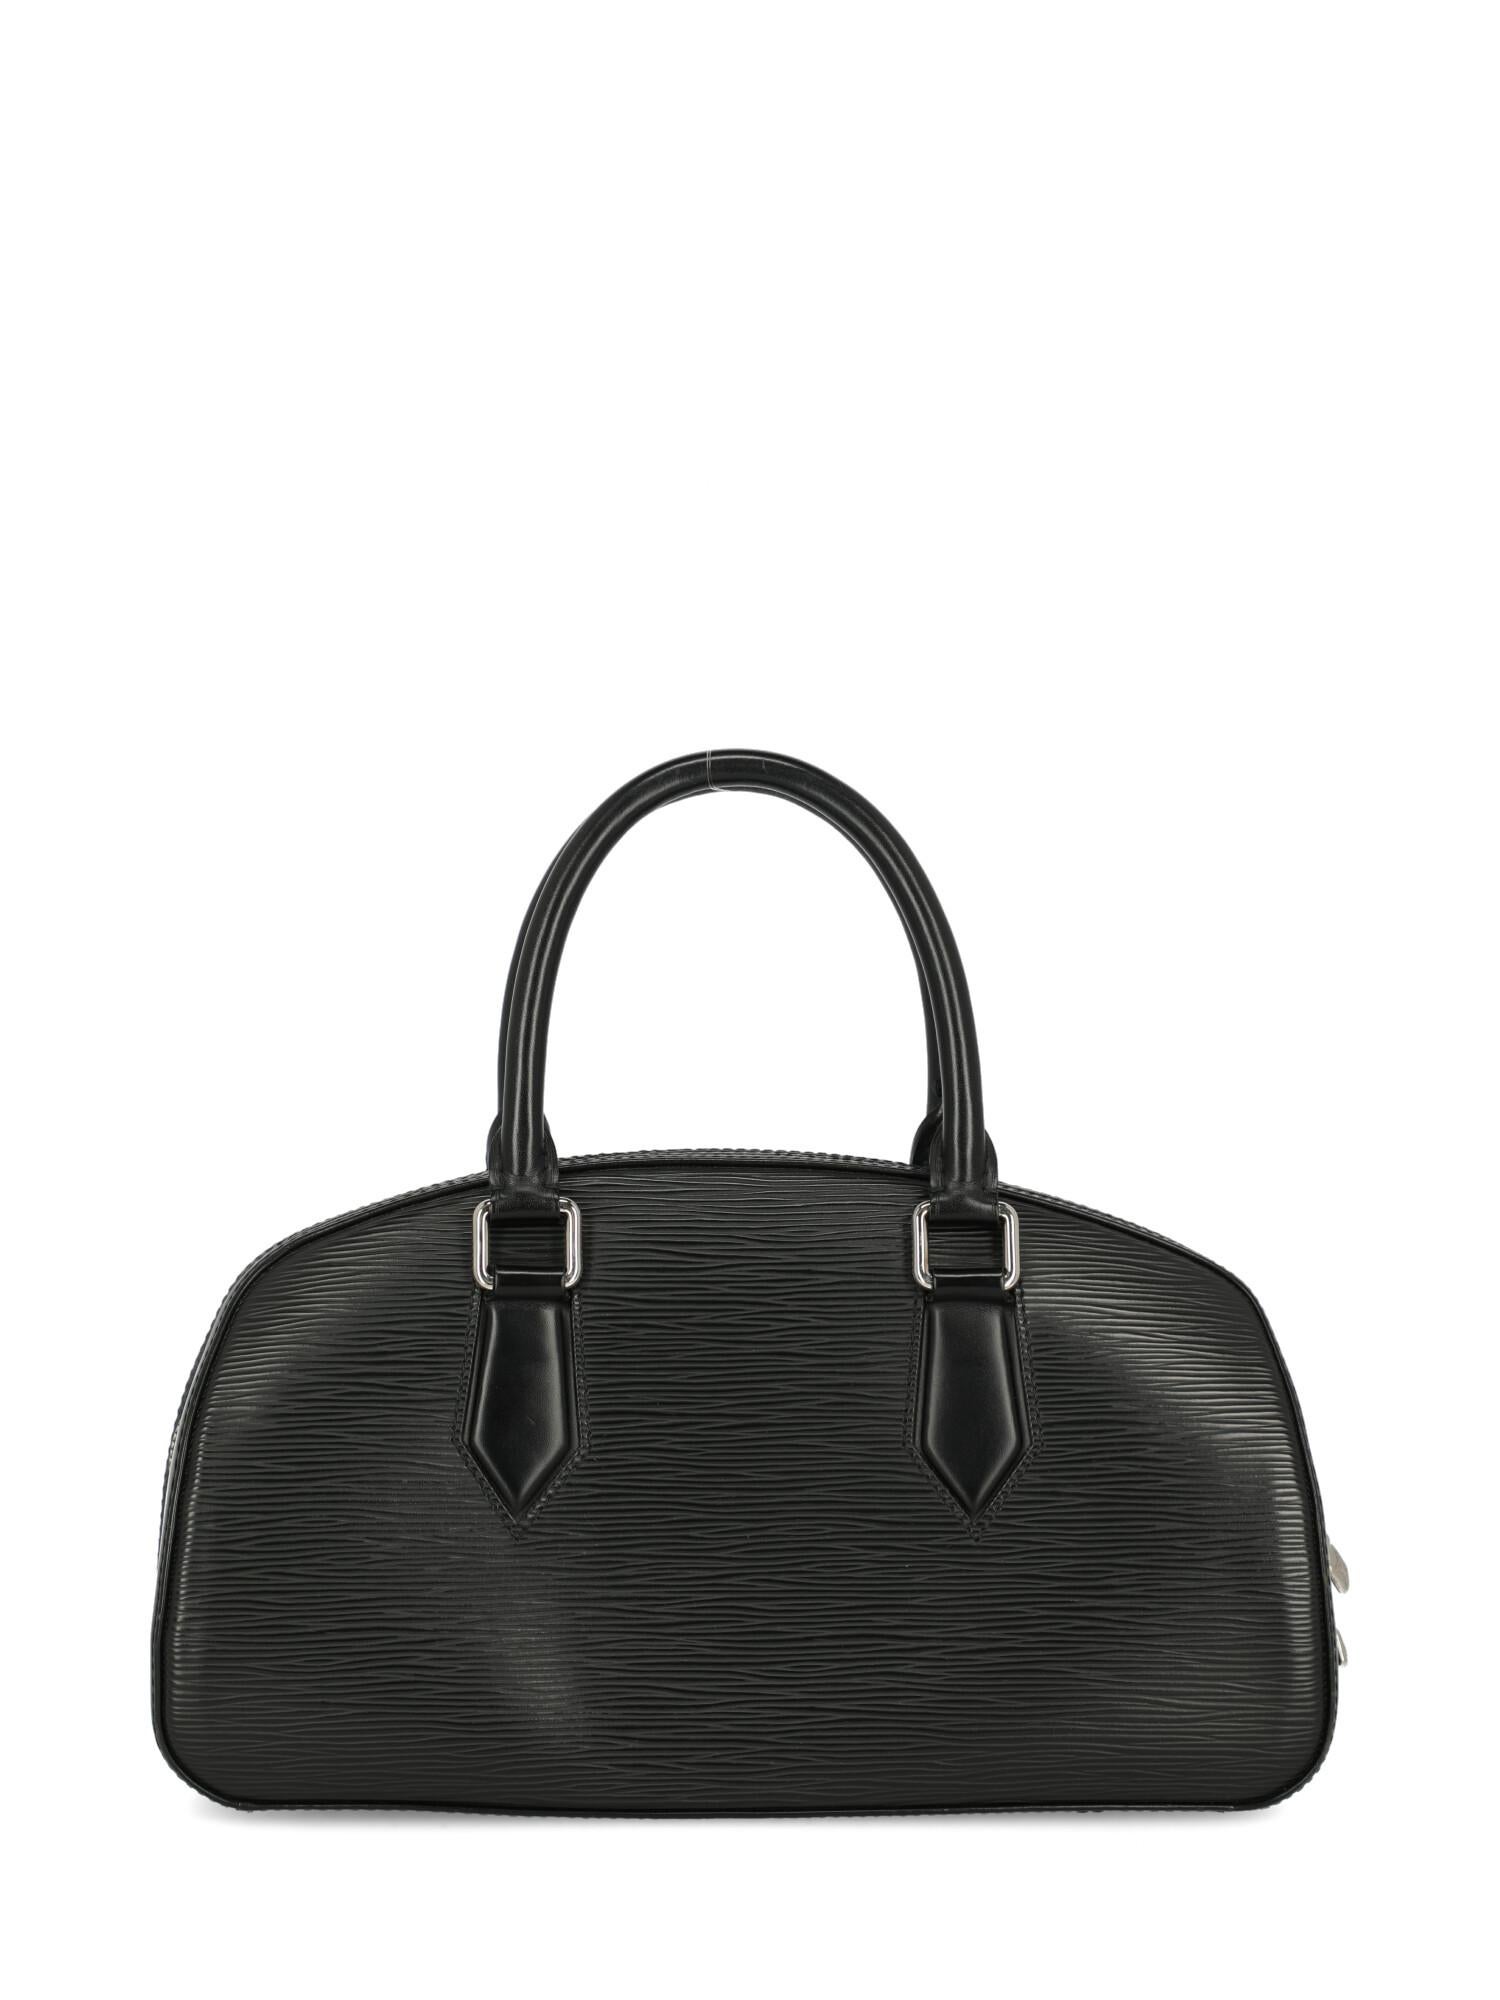 Louis Vuitton Women's Handbag Black Leather In Fair Condition For Sale In Milan, IT